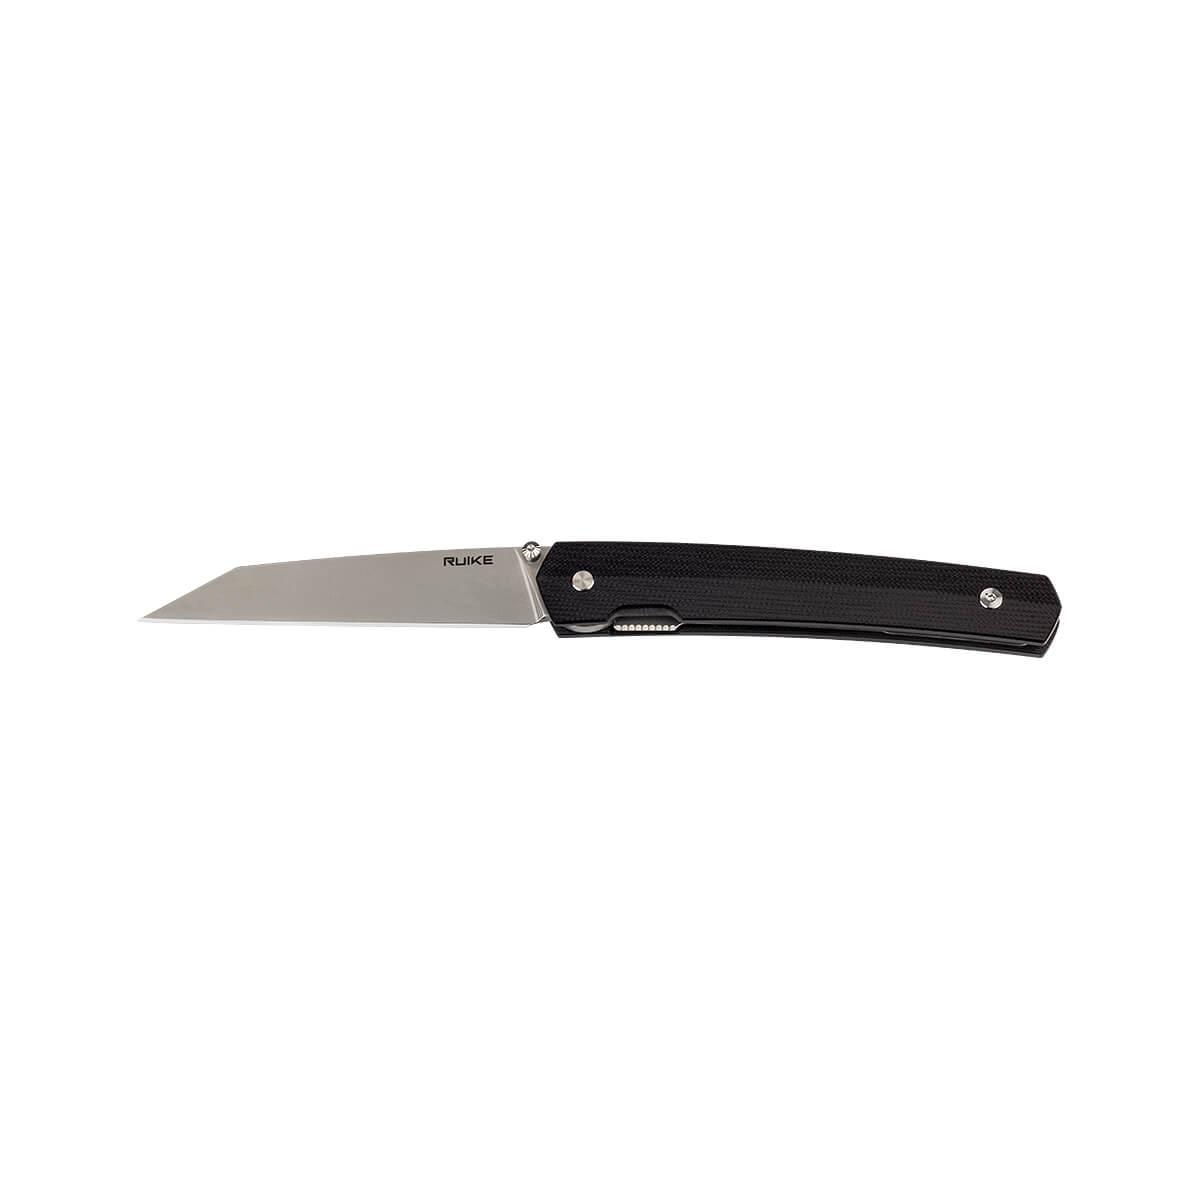  P865b Folder Knife